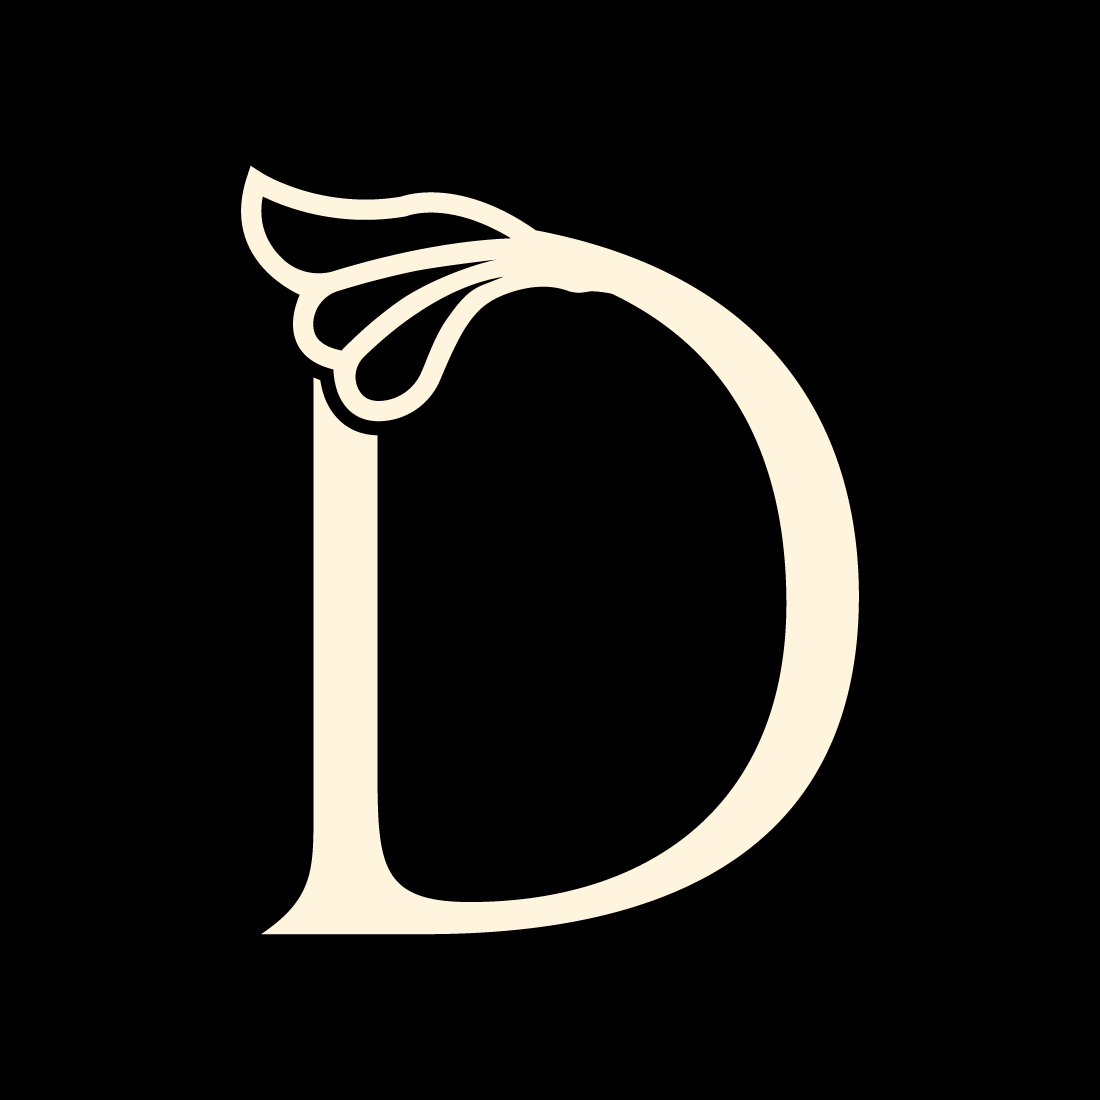 Luxury D letter logo design vector images D logo template vector arts preview image.